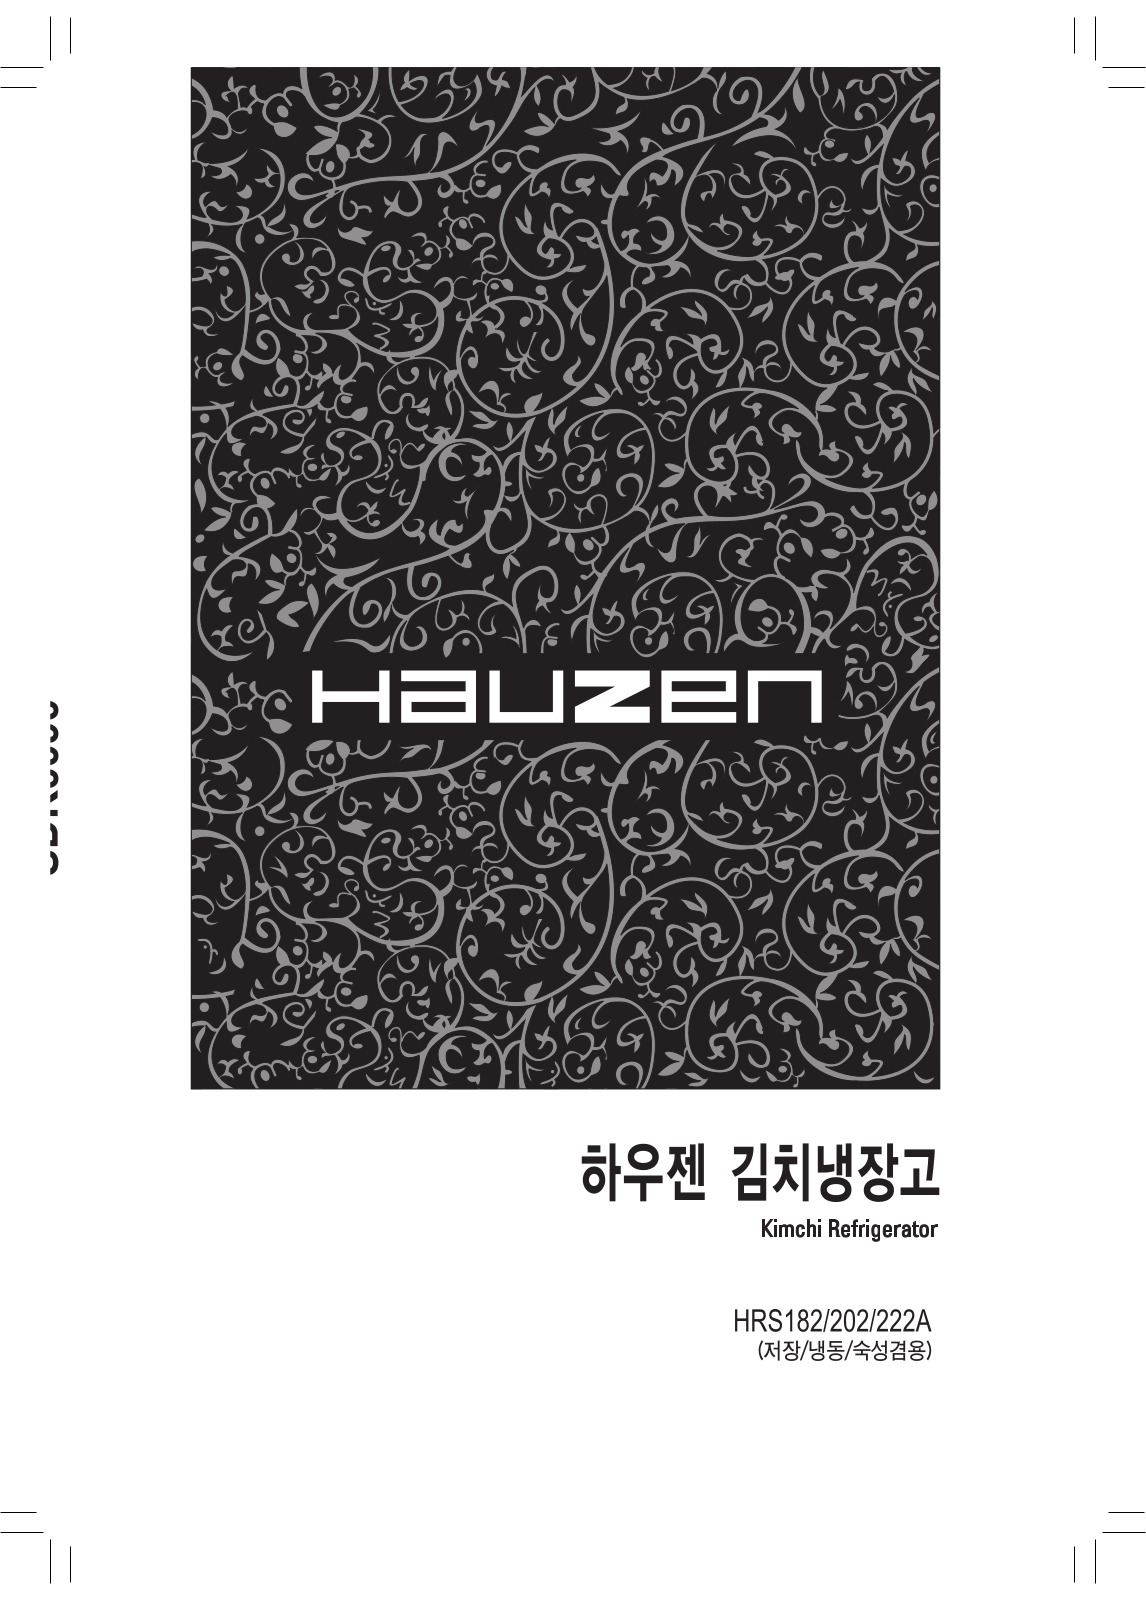 Samsung HRS202ATH, HRS182ATC, HRS182ATH Manual